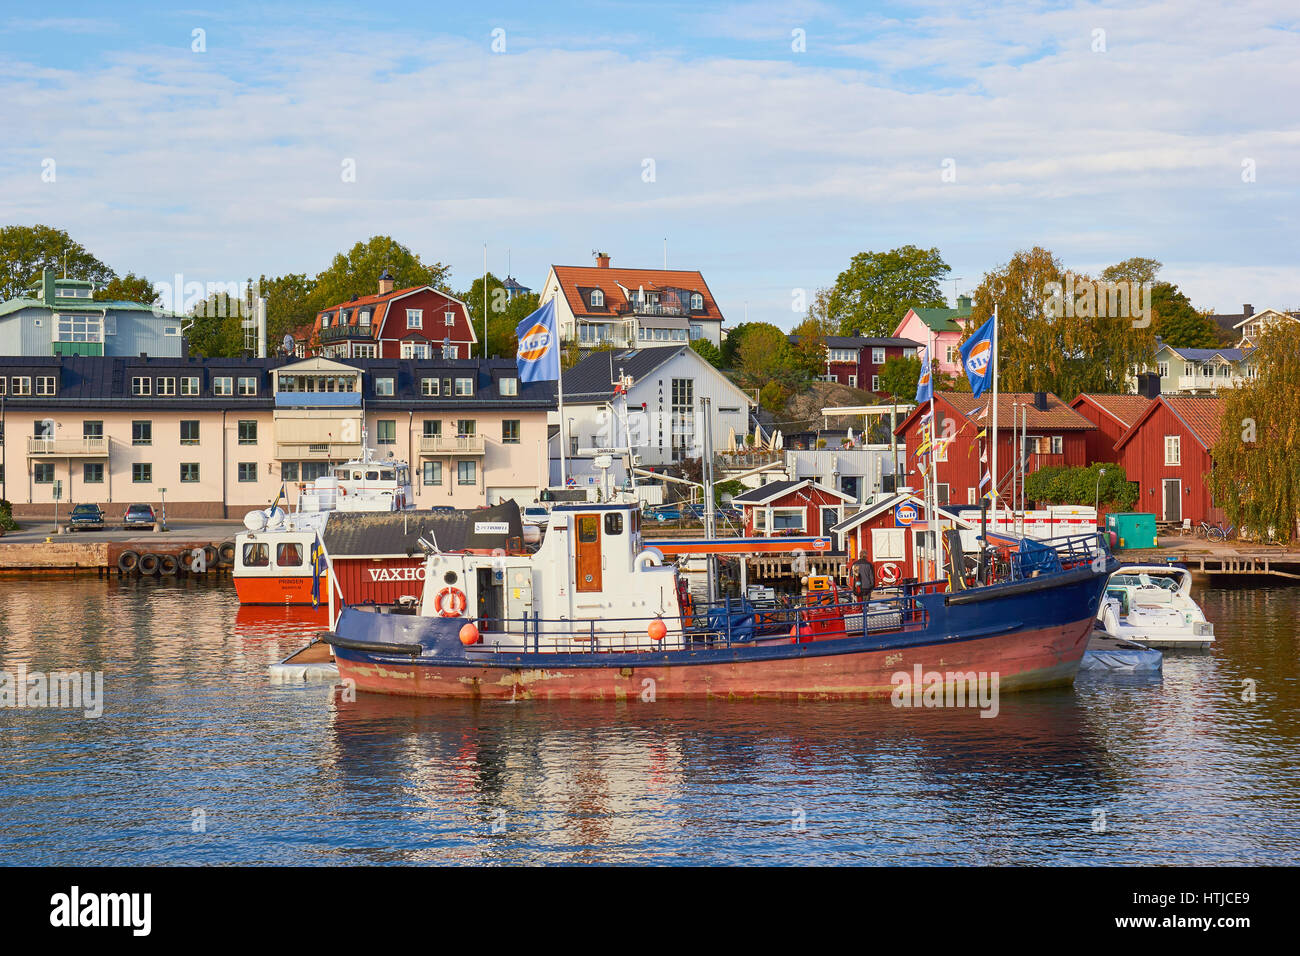 Boat refuelling, Vaxholm, Sweden, Scandinavia Stock Photo